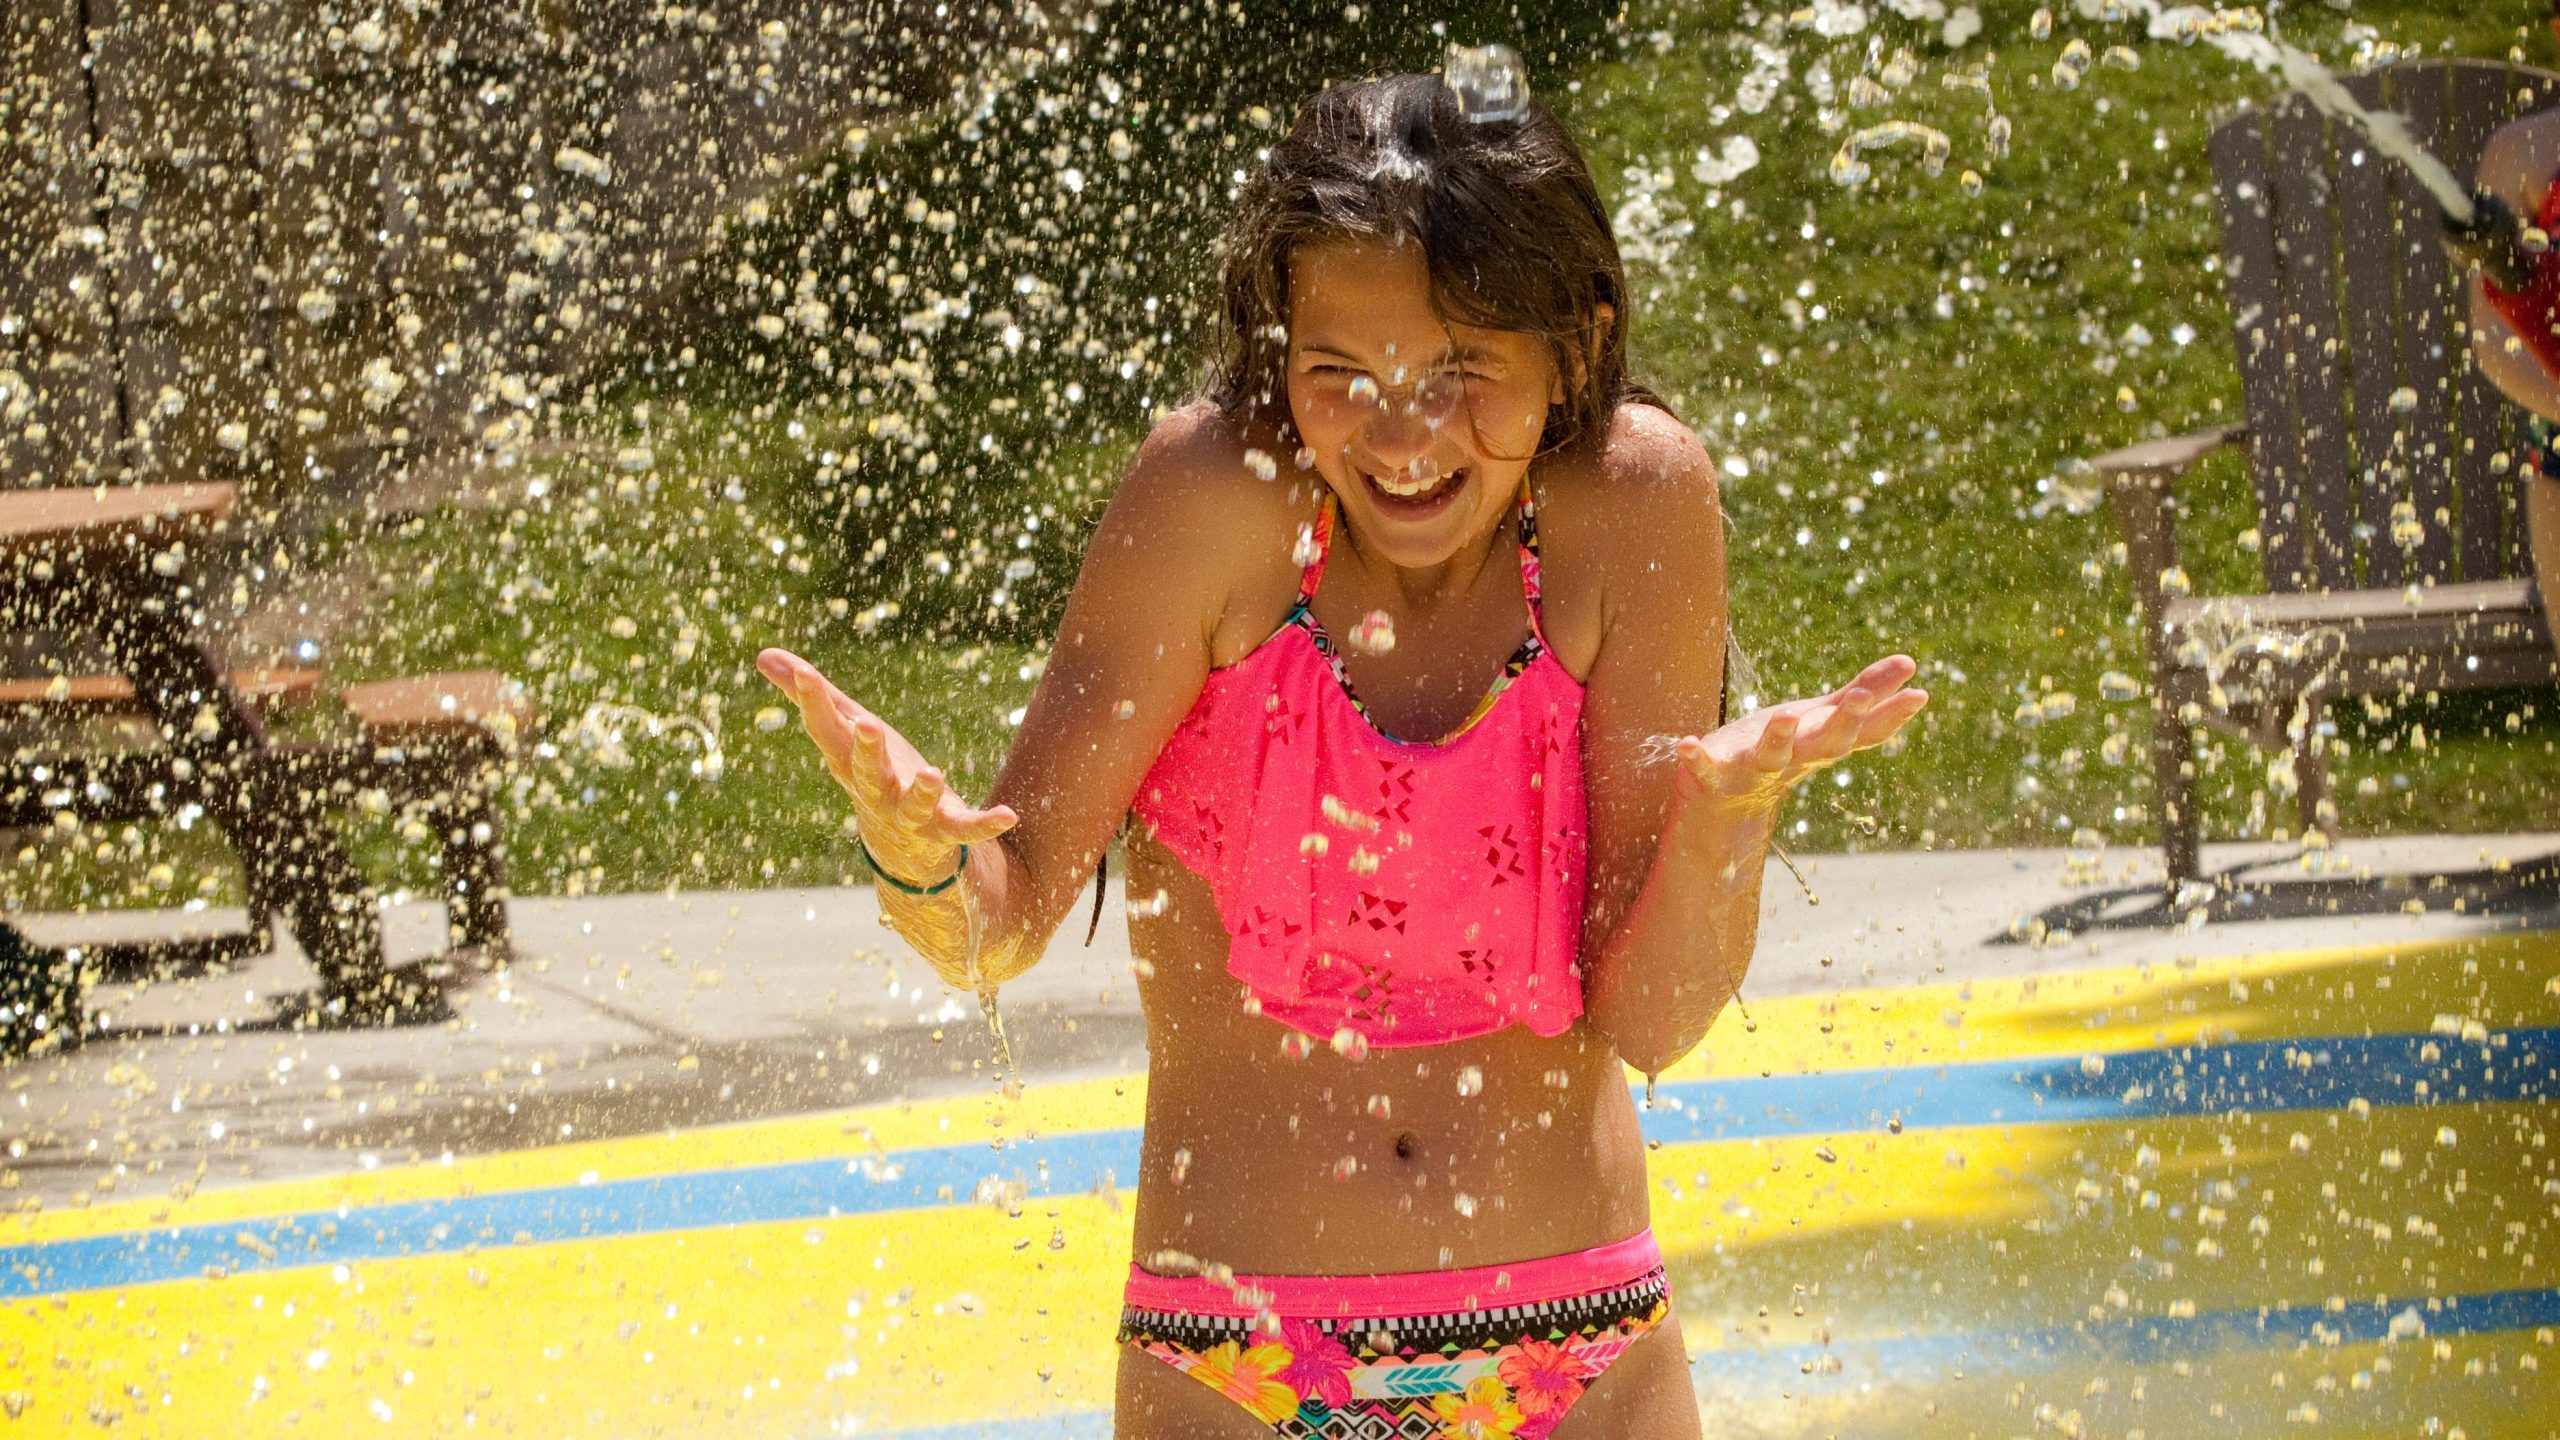 Crispin Center Outdoor Pool & Fountains of Fun photo